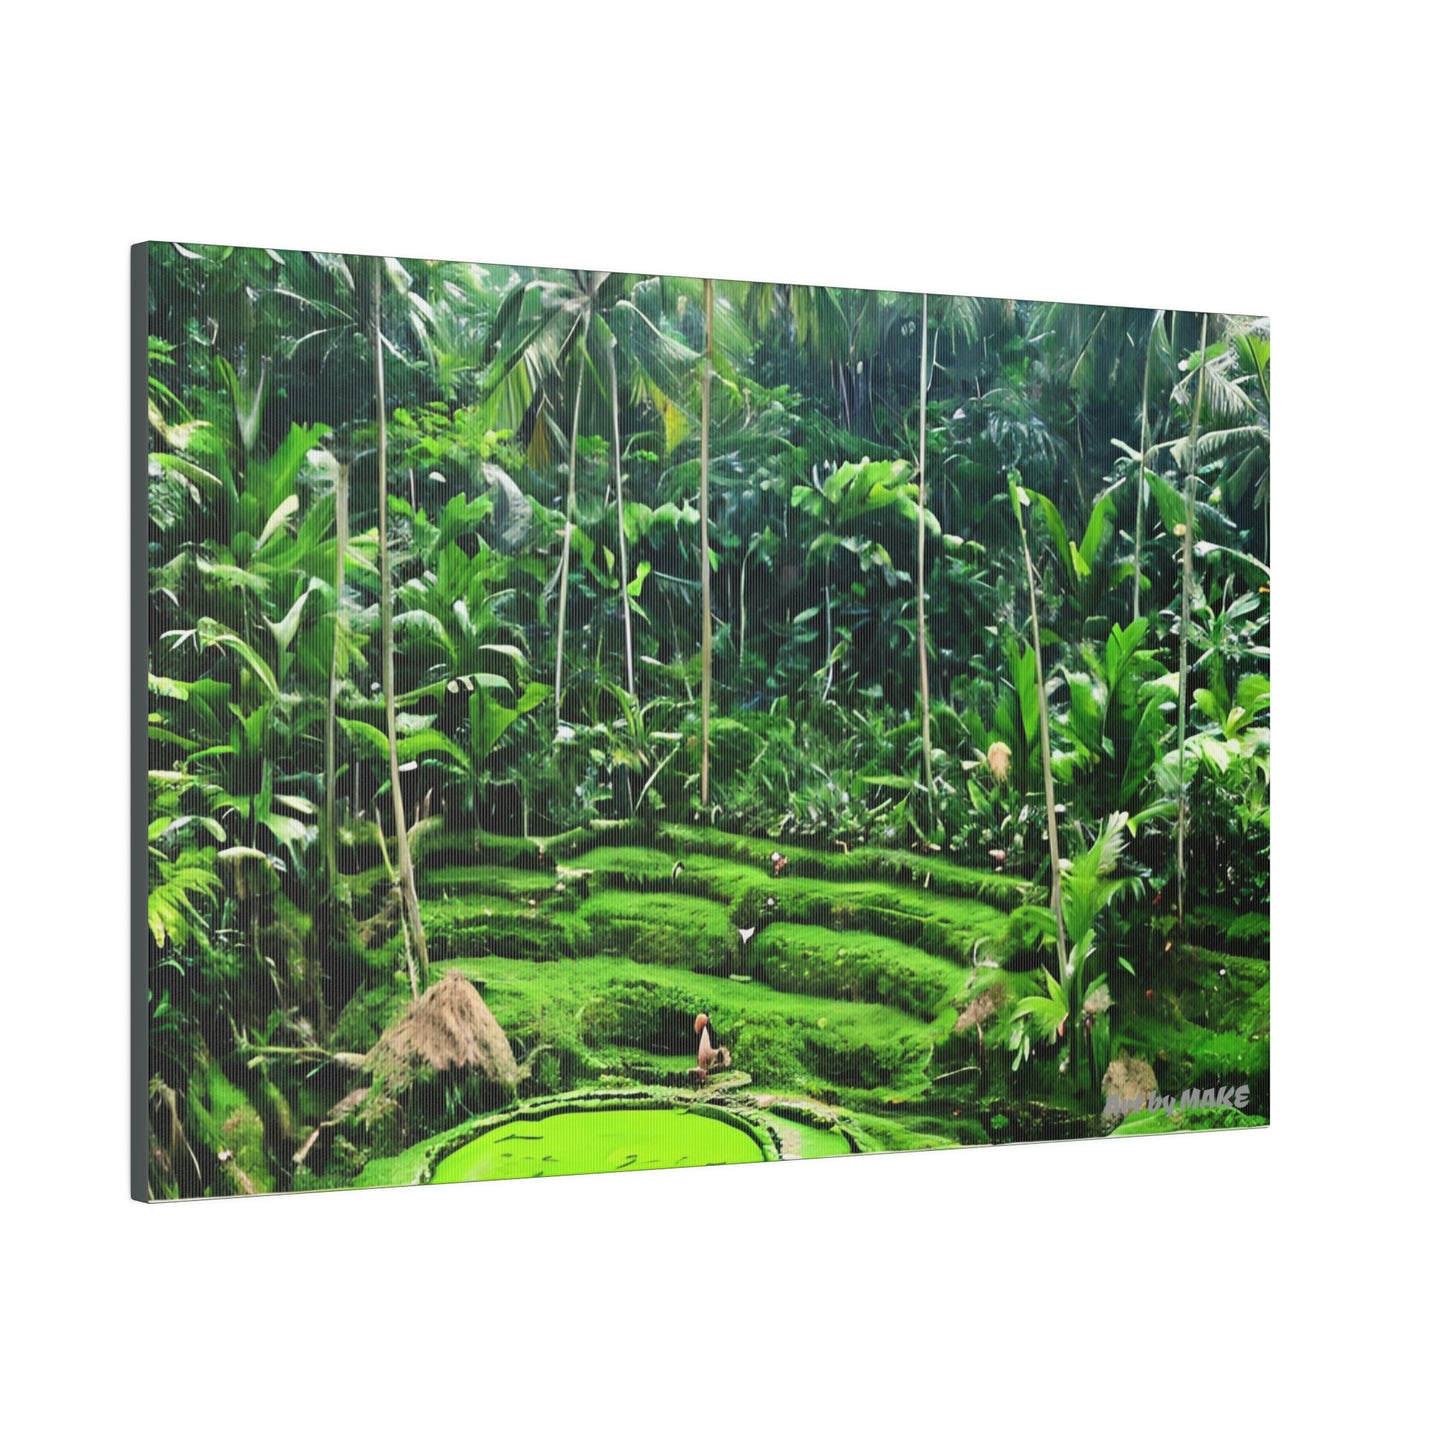 Bali Nature 1 - 24"x16" Matte Canvas, Stretched, 0.75"